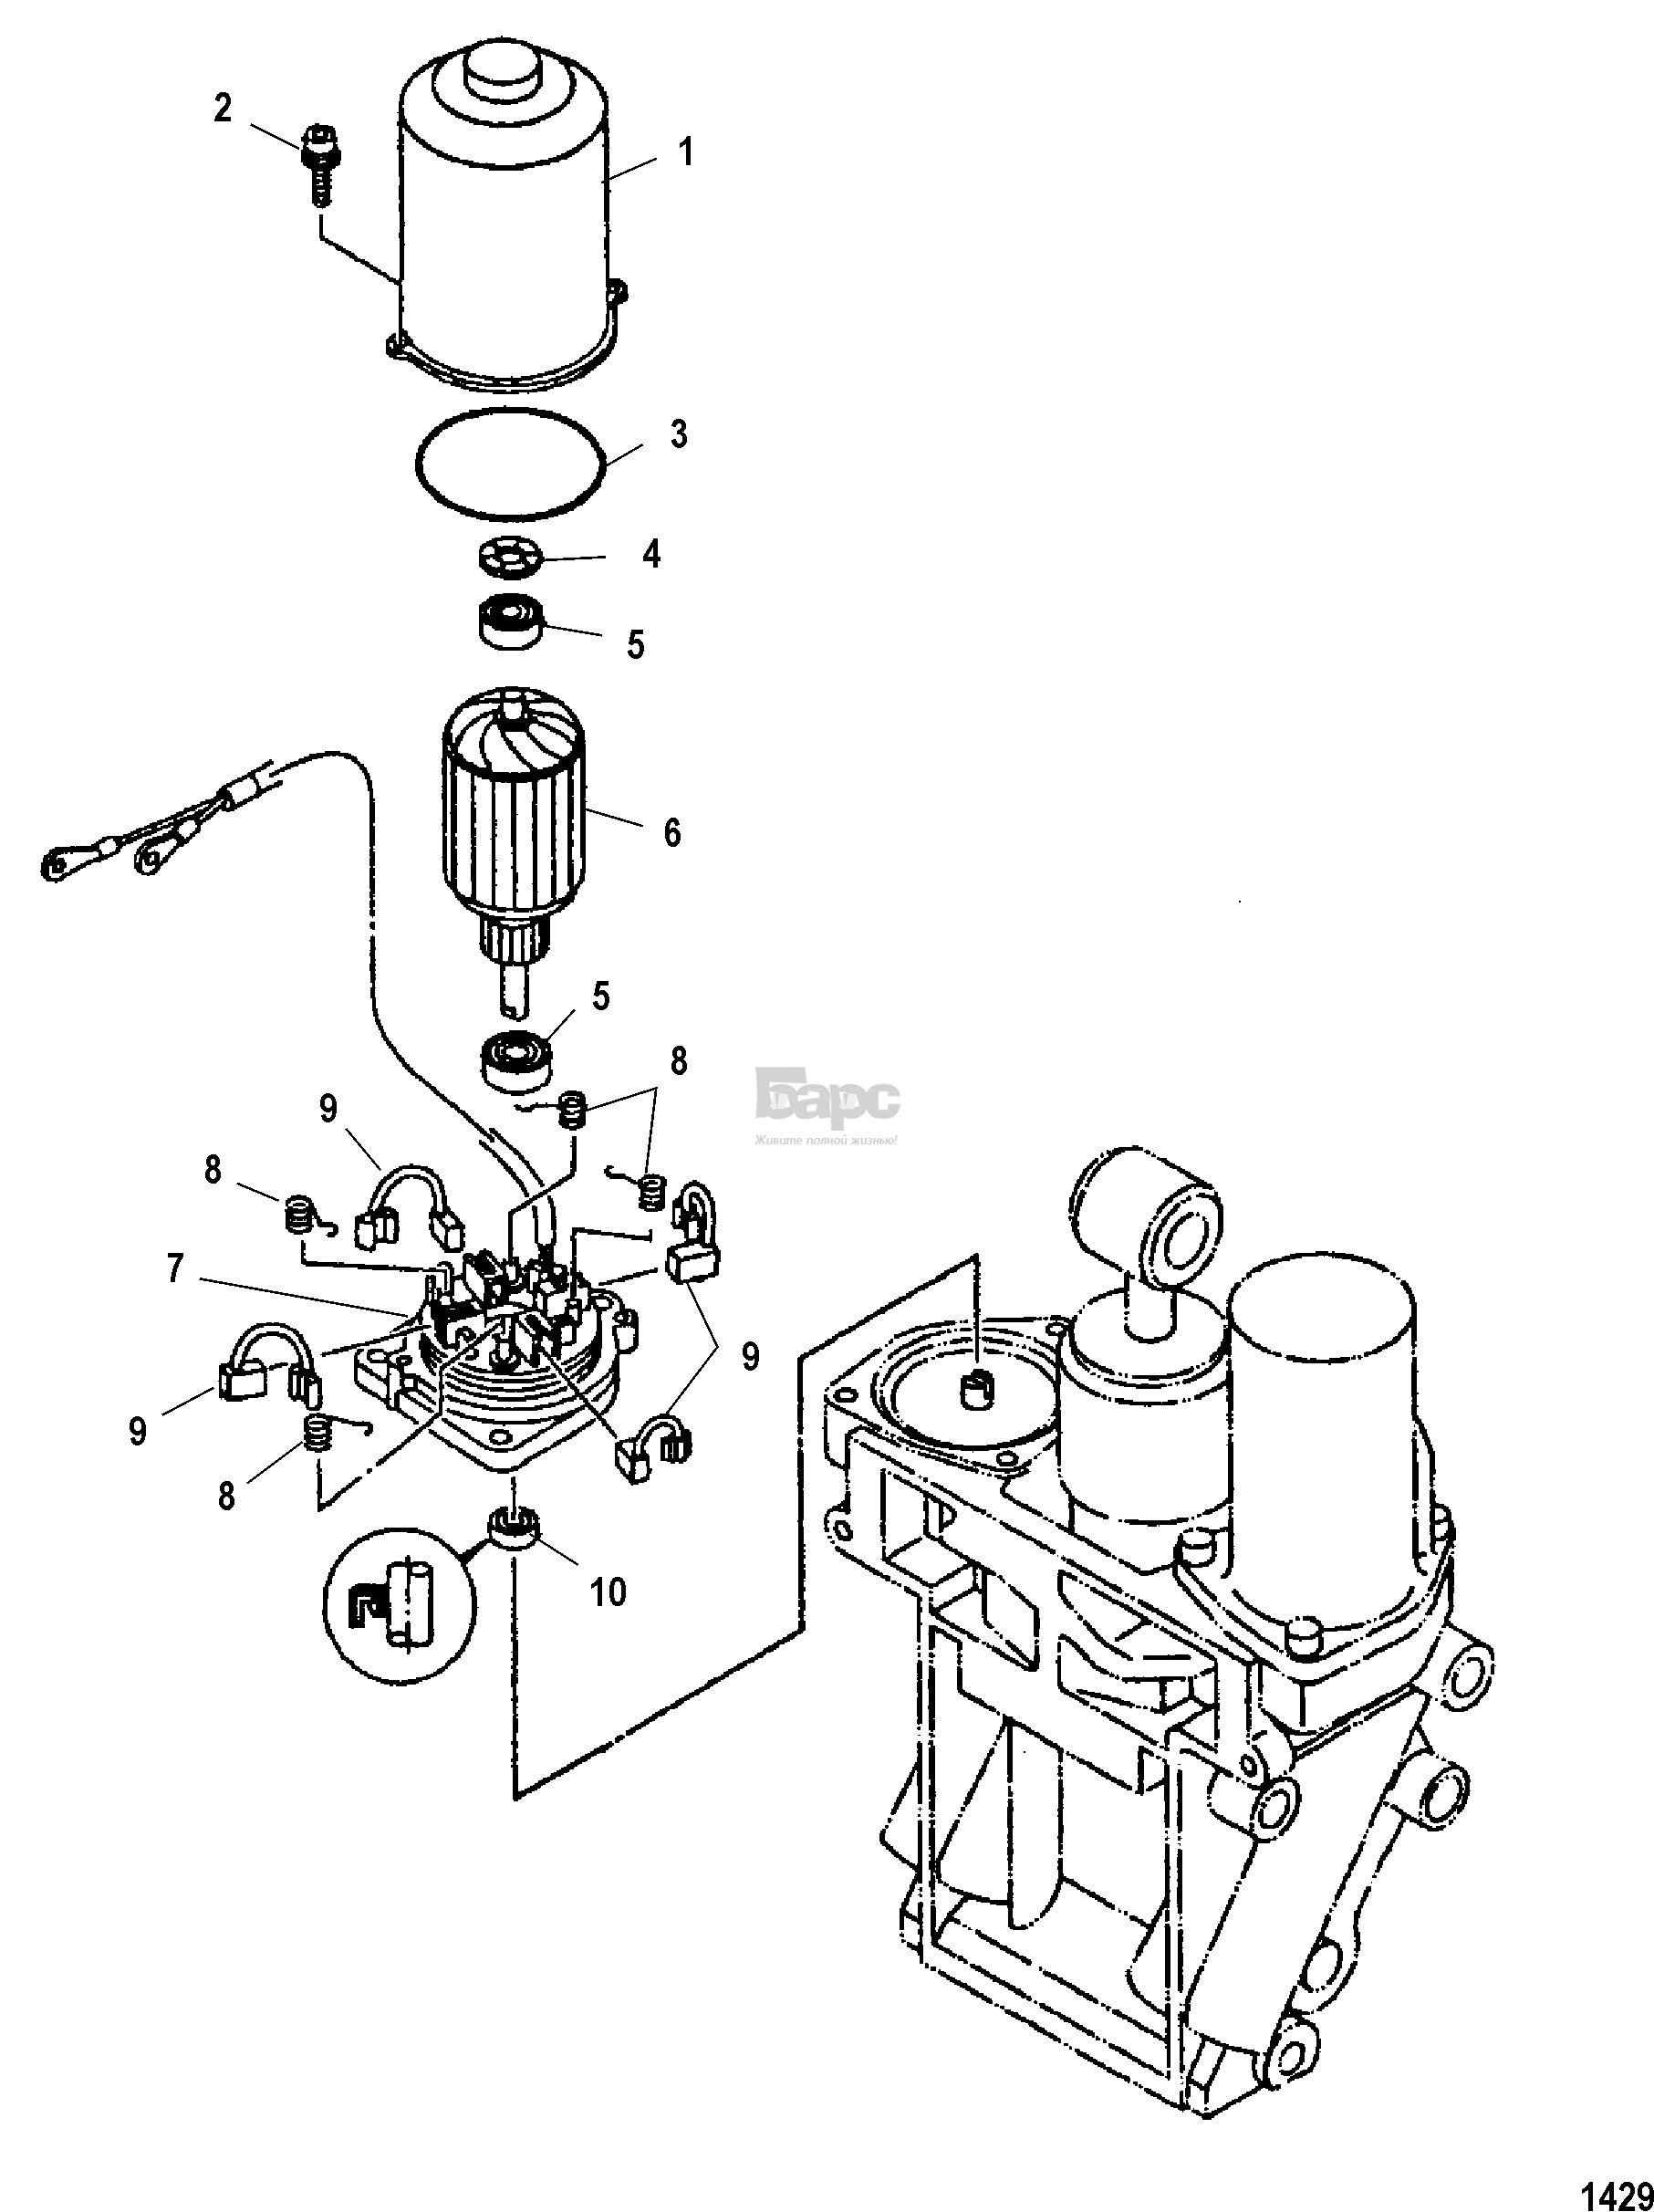 Power Trim Motor